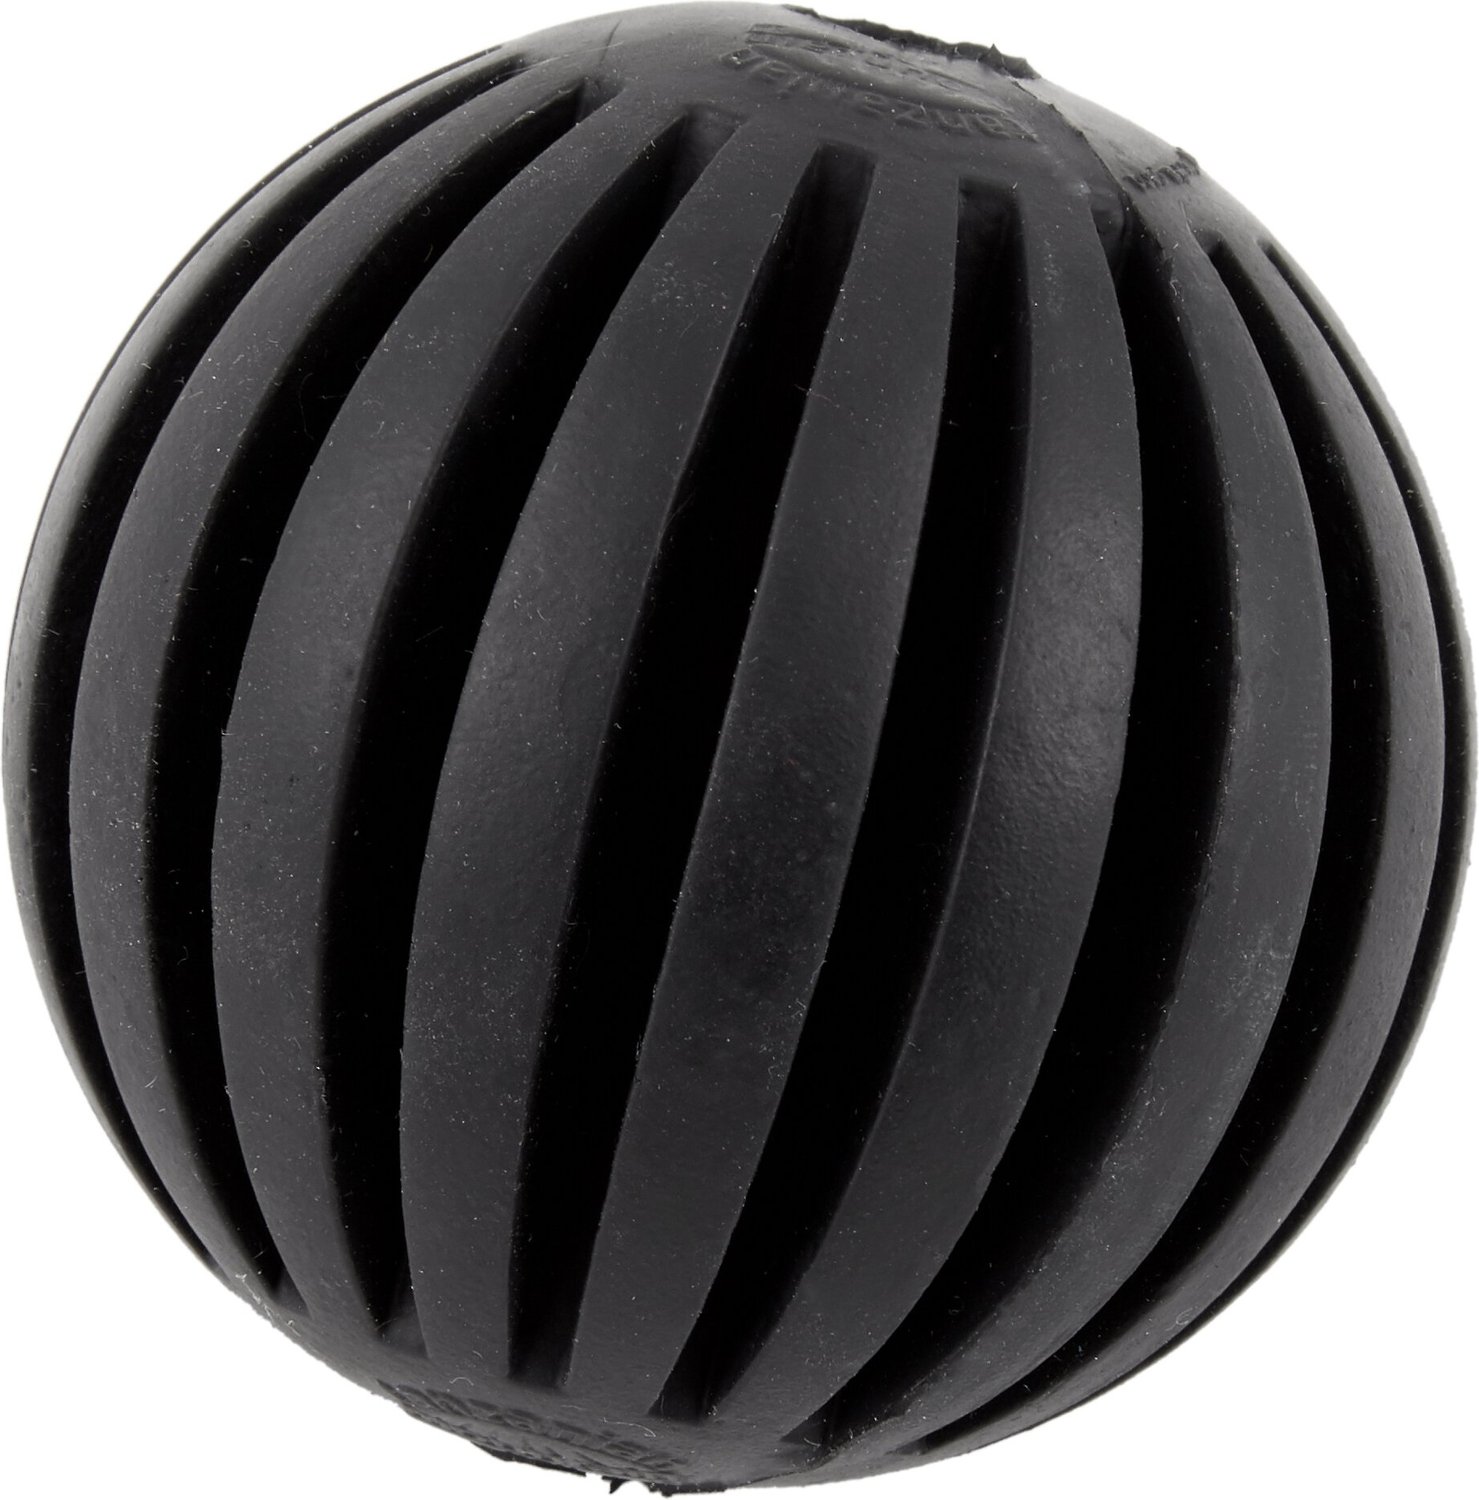 tanzanian mountain ball